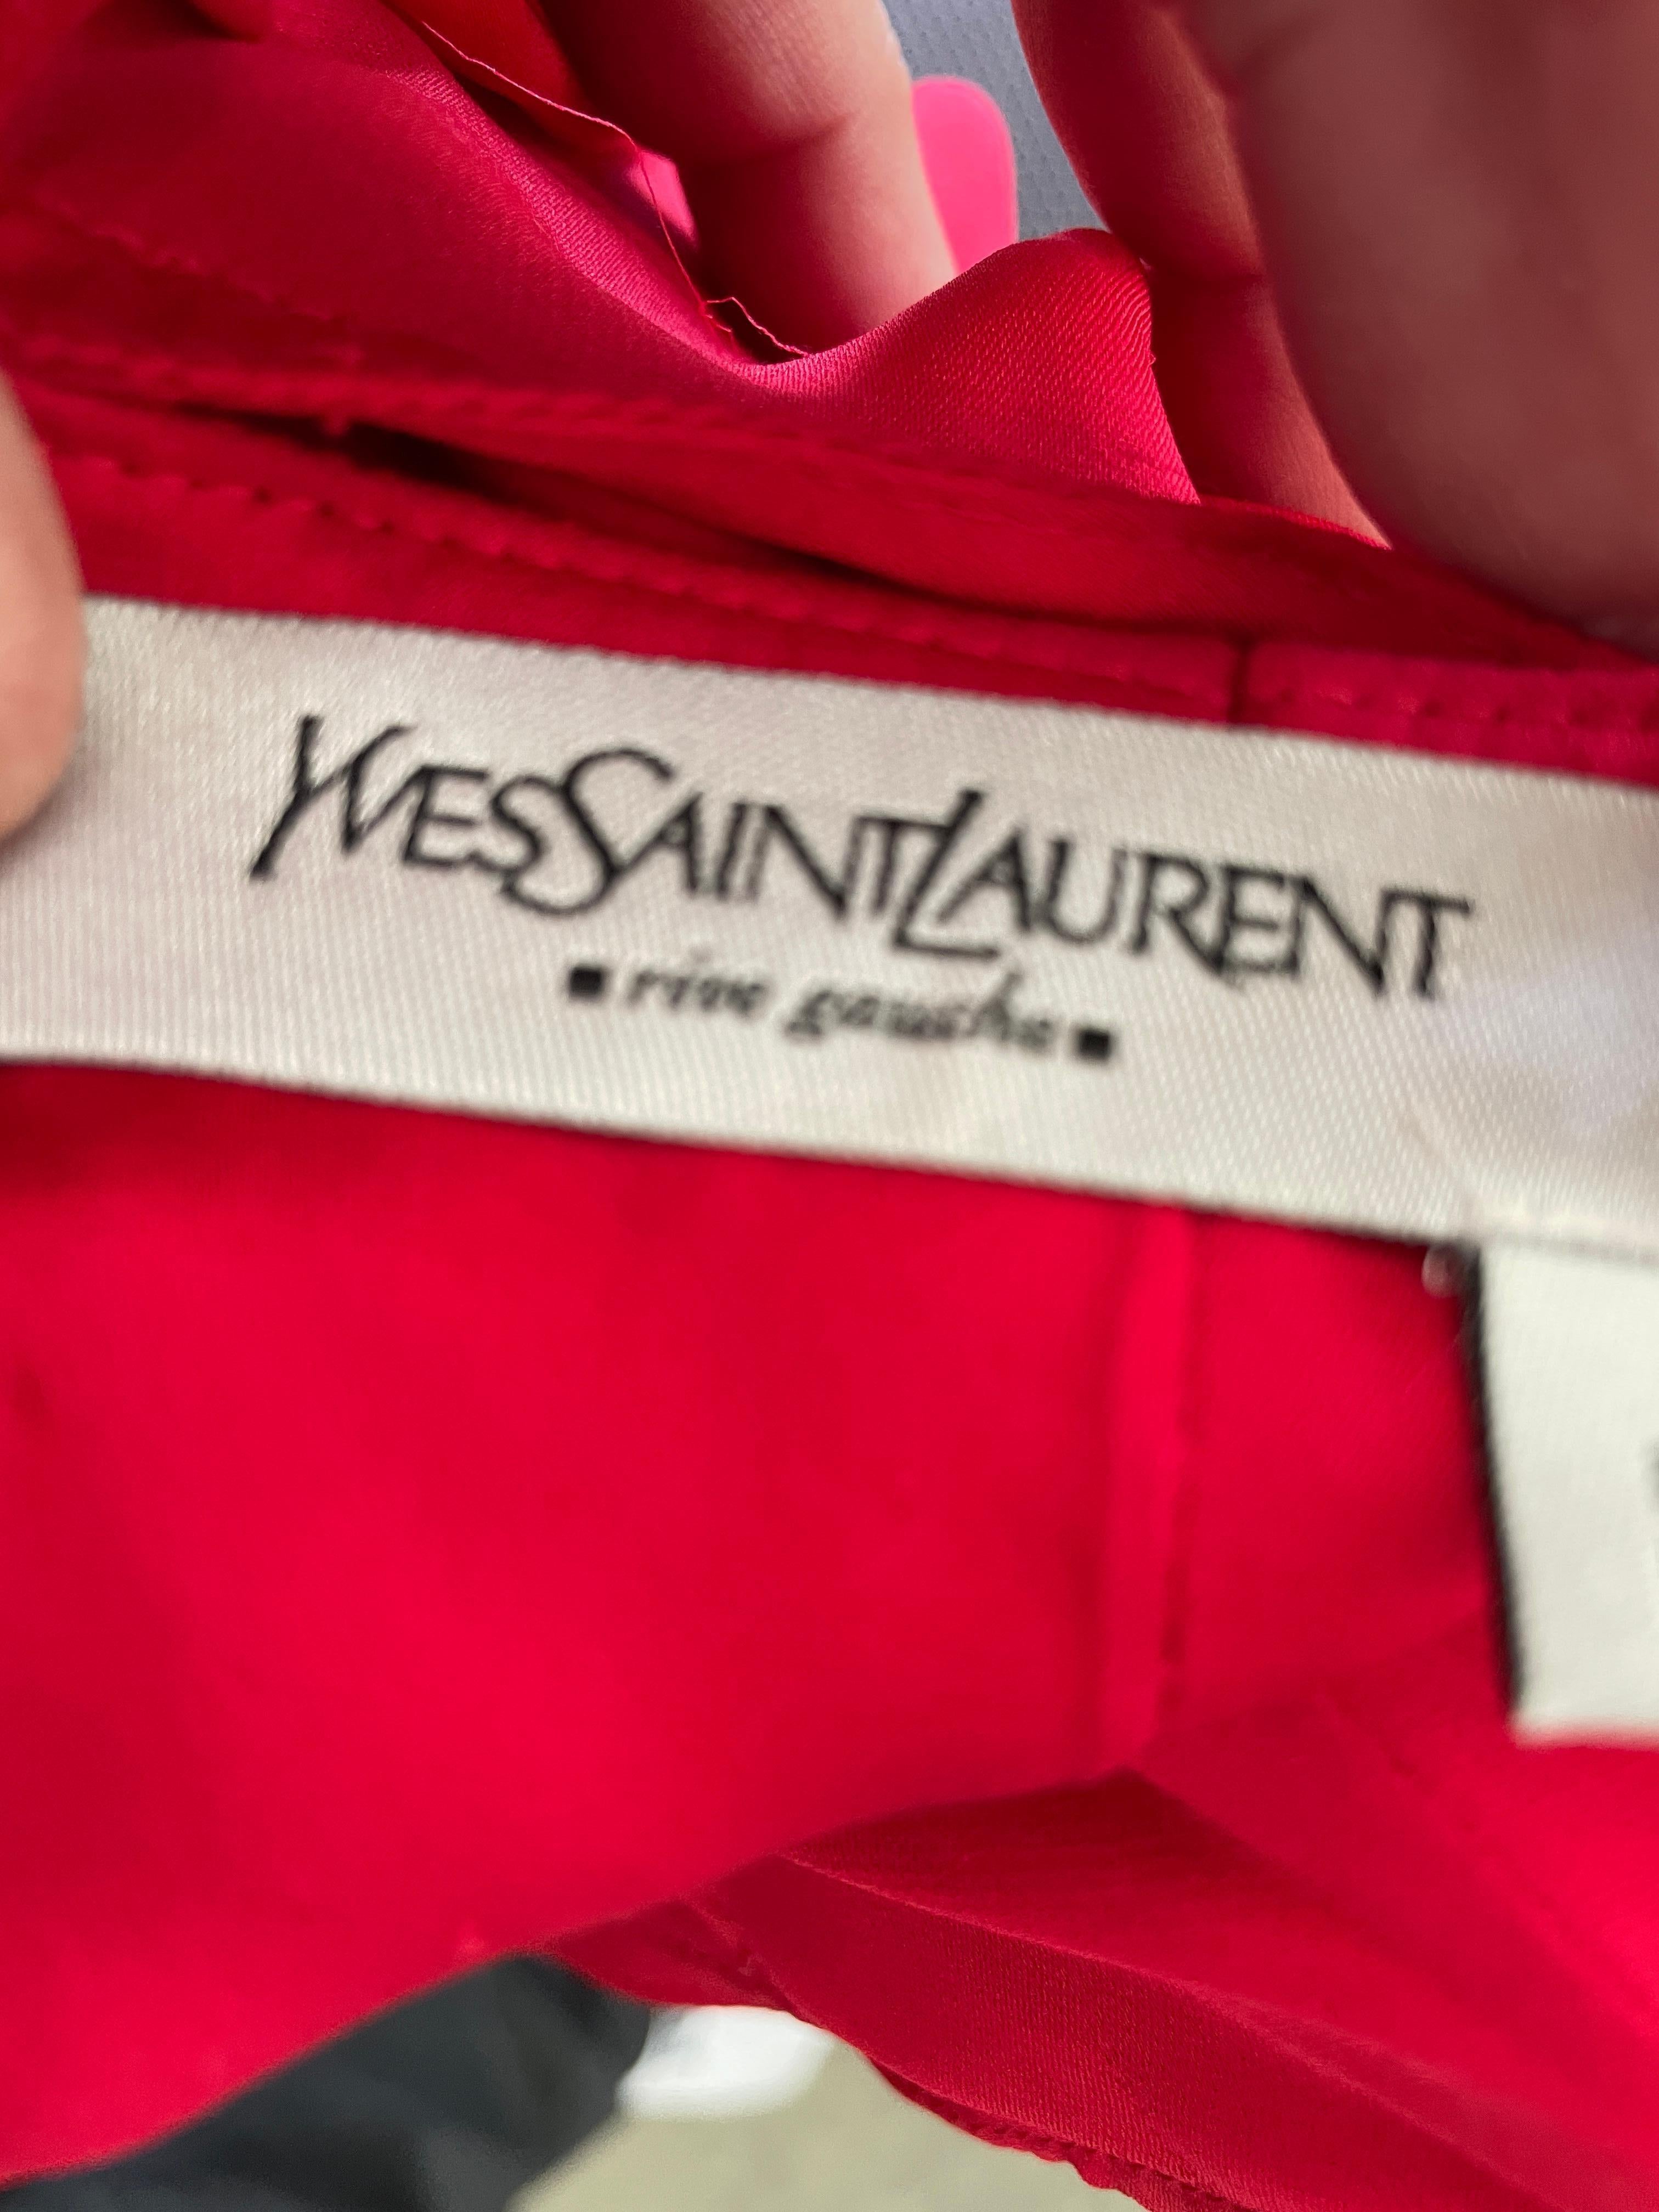 Yves Saint Laurent by Tom Ford 2003 Ruffled Red Silk Dress  9